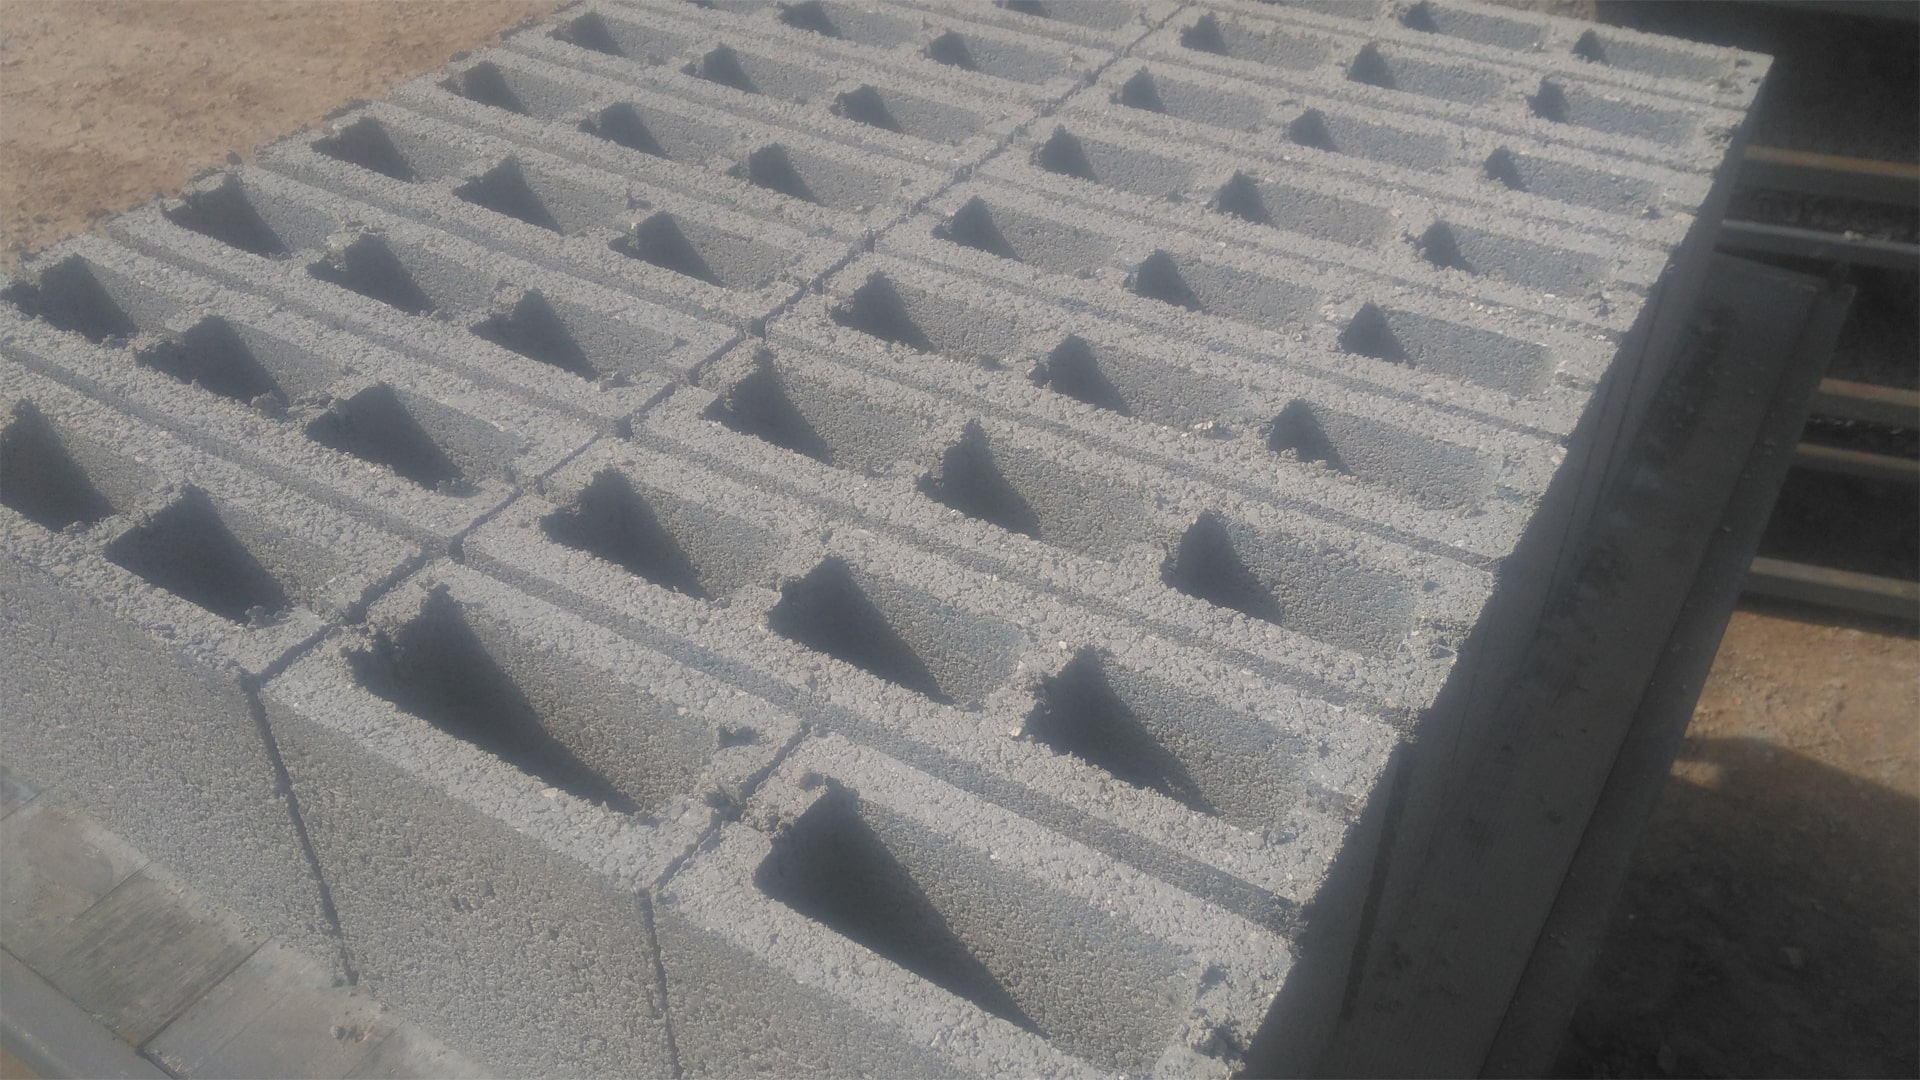 Concrete-Ready-Hollow-Blocks.jpg